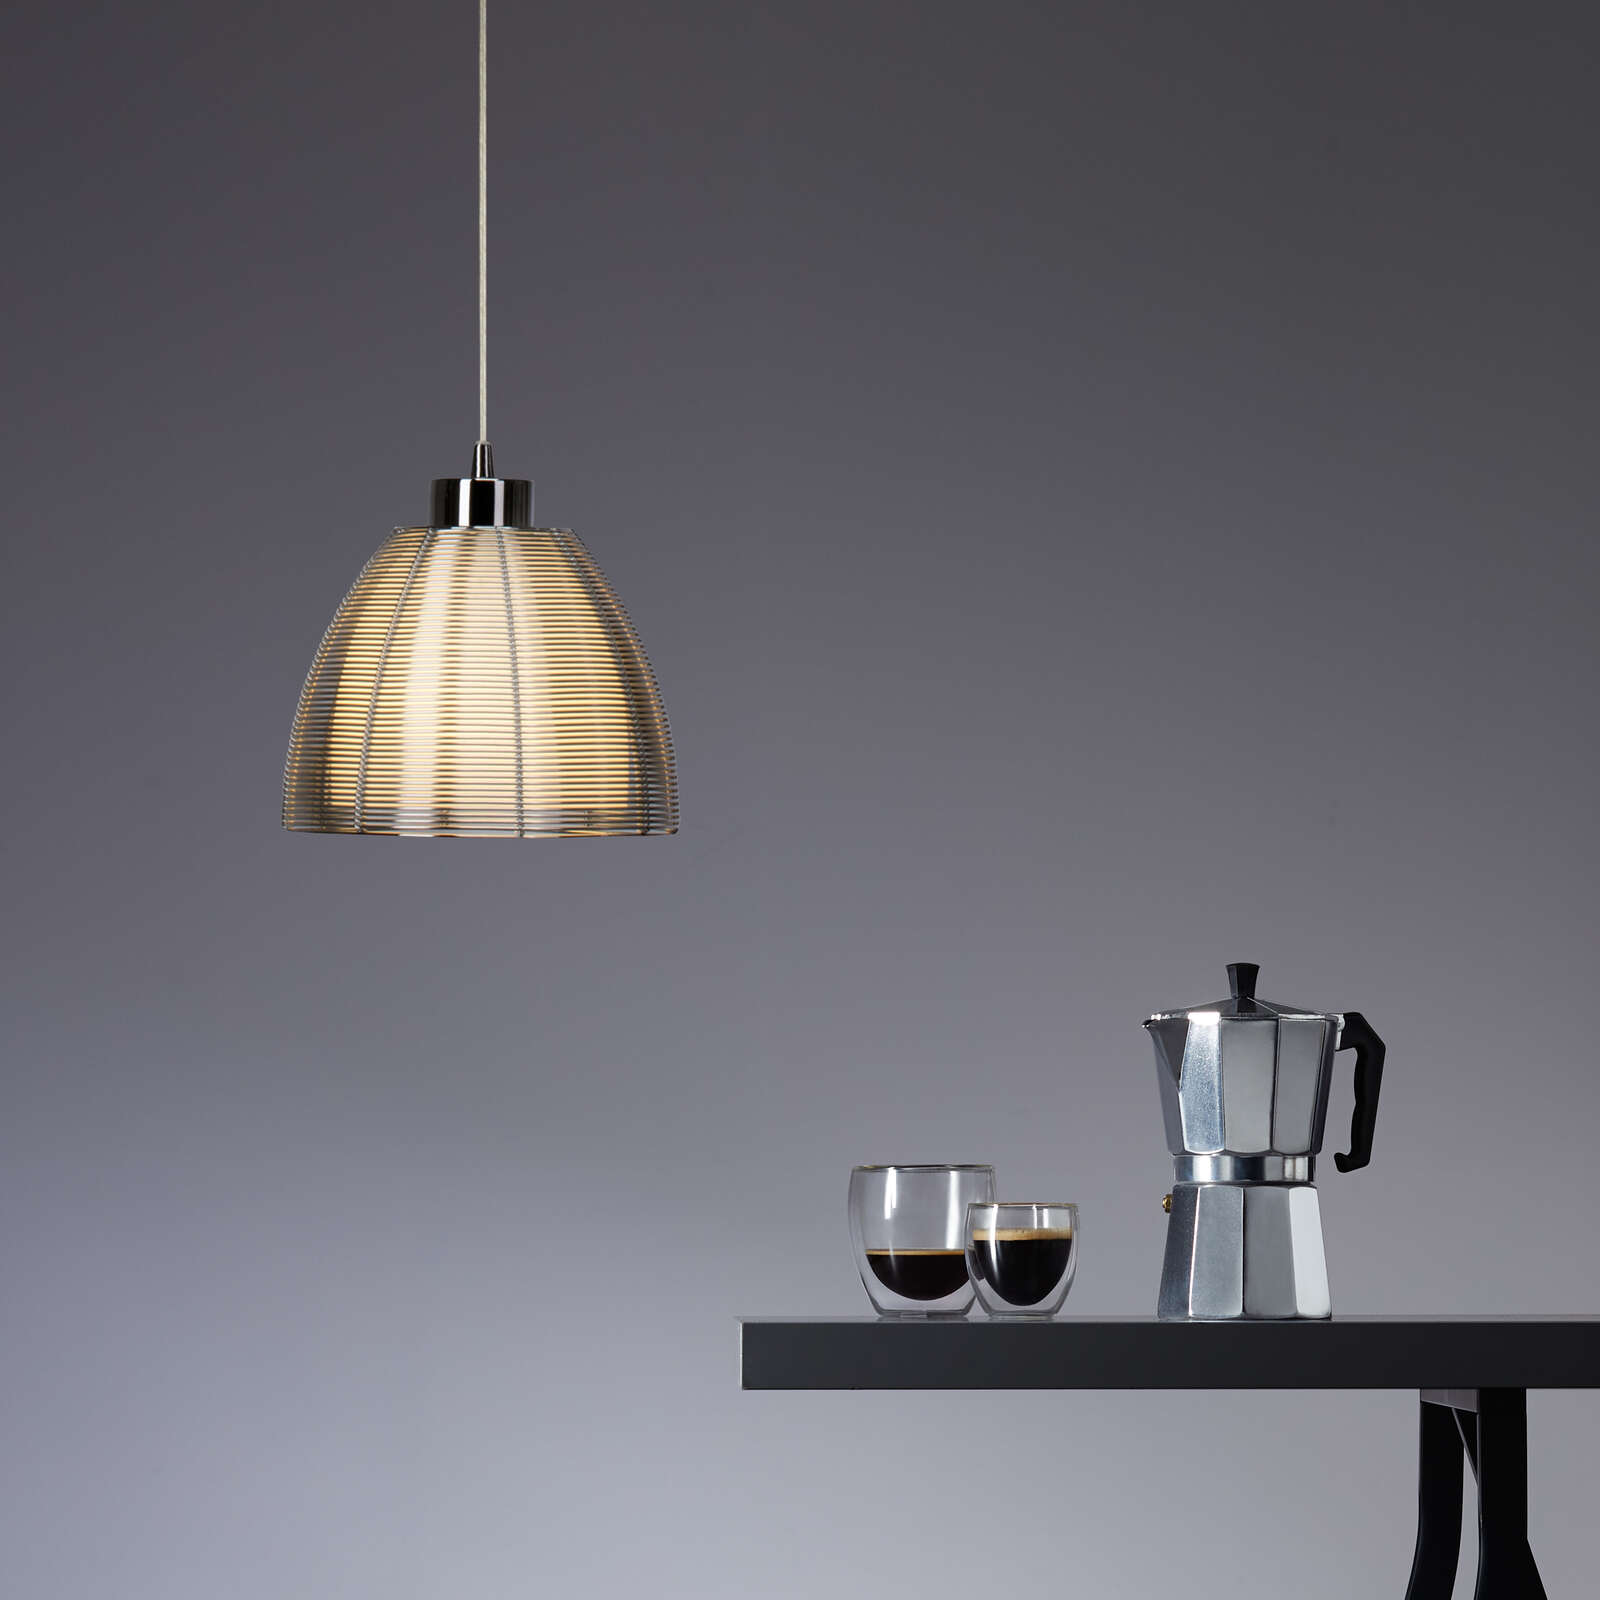             Glazen hanglamp - Maxime 1 - Metallic
        